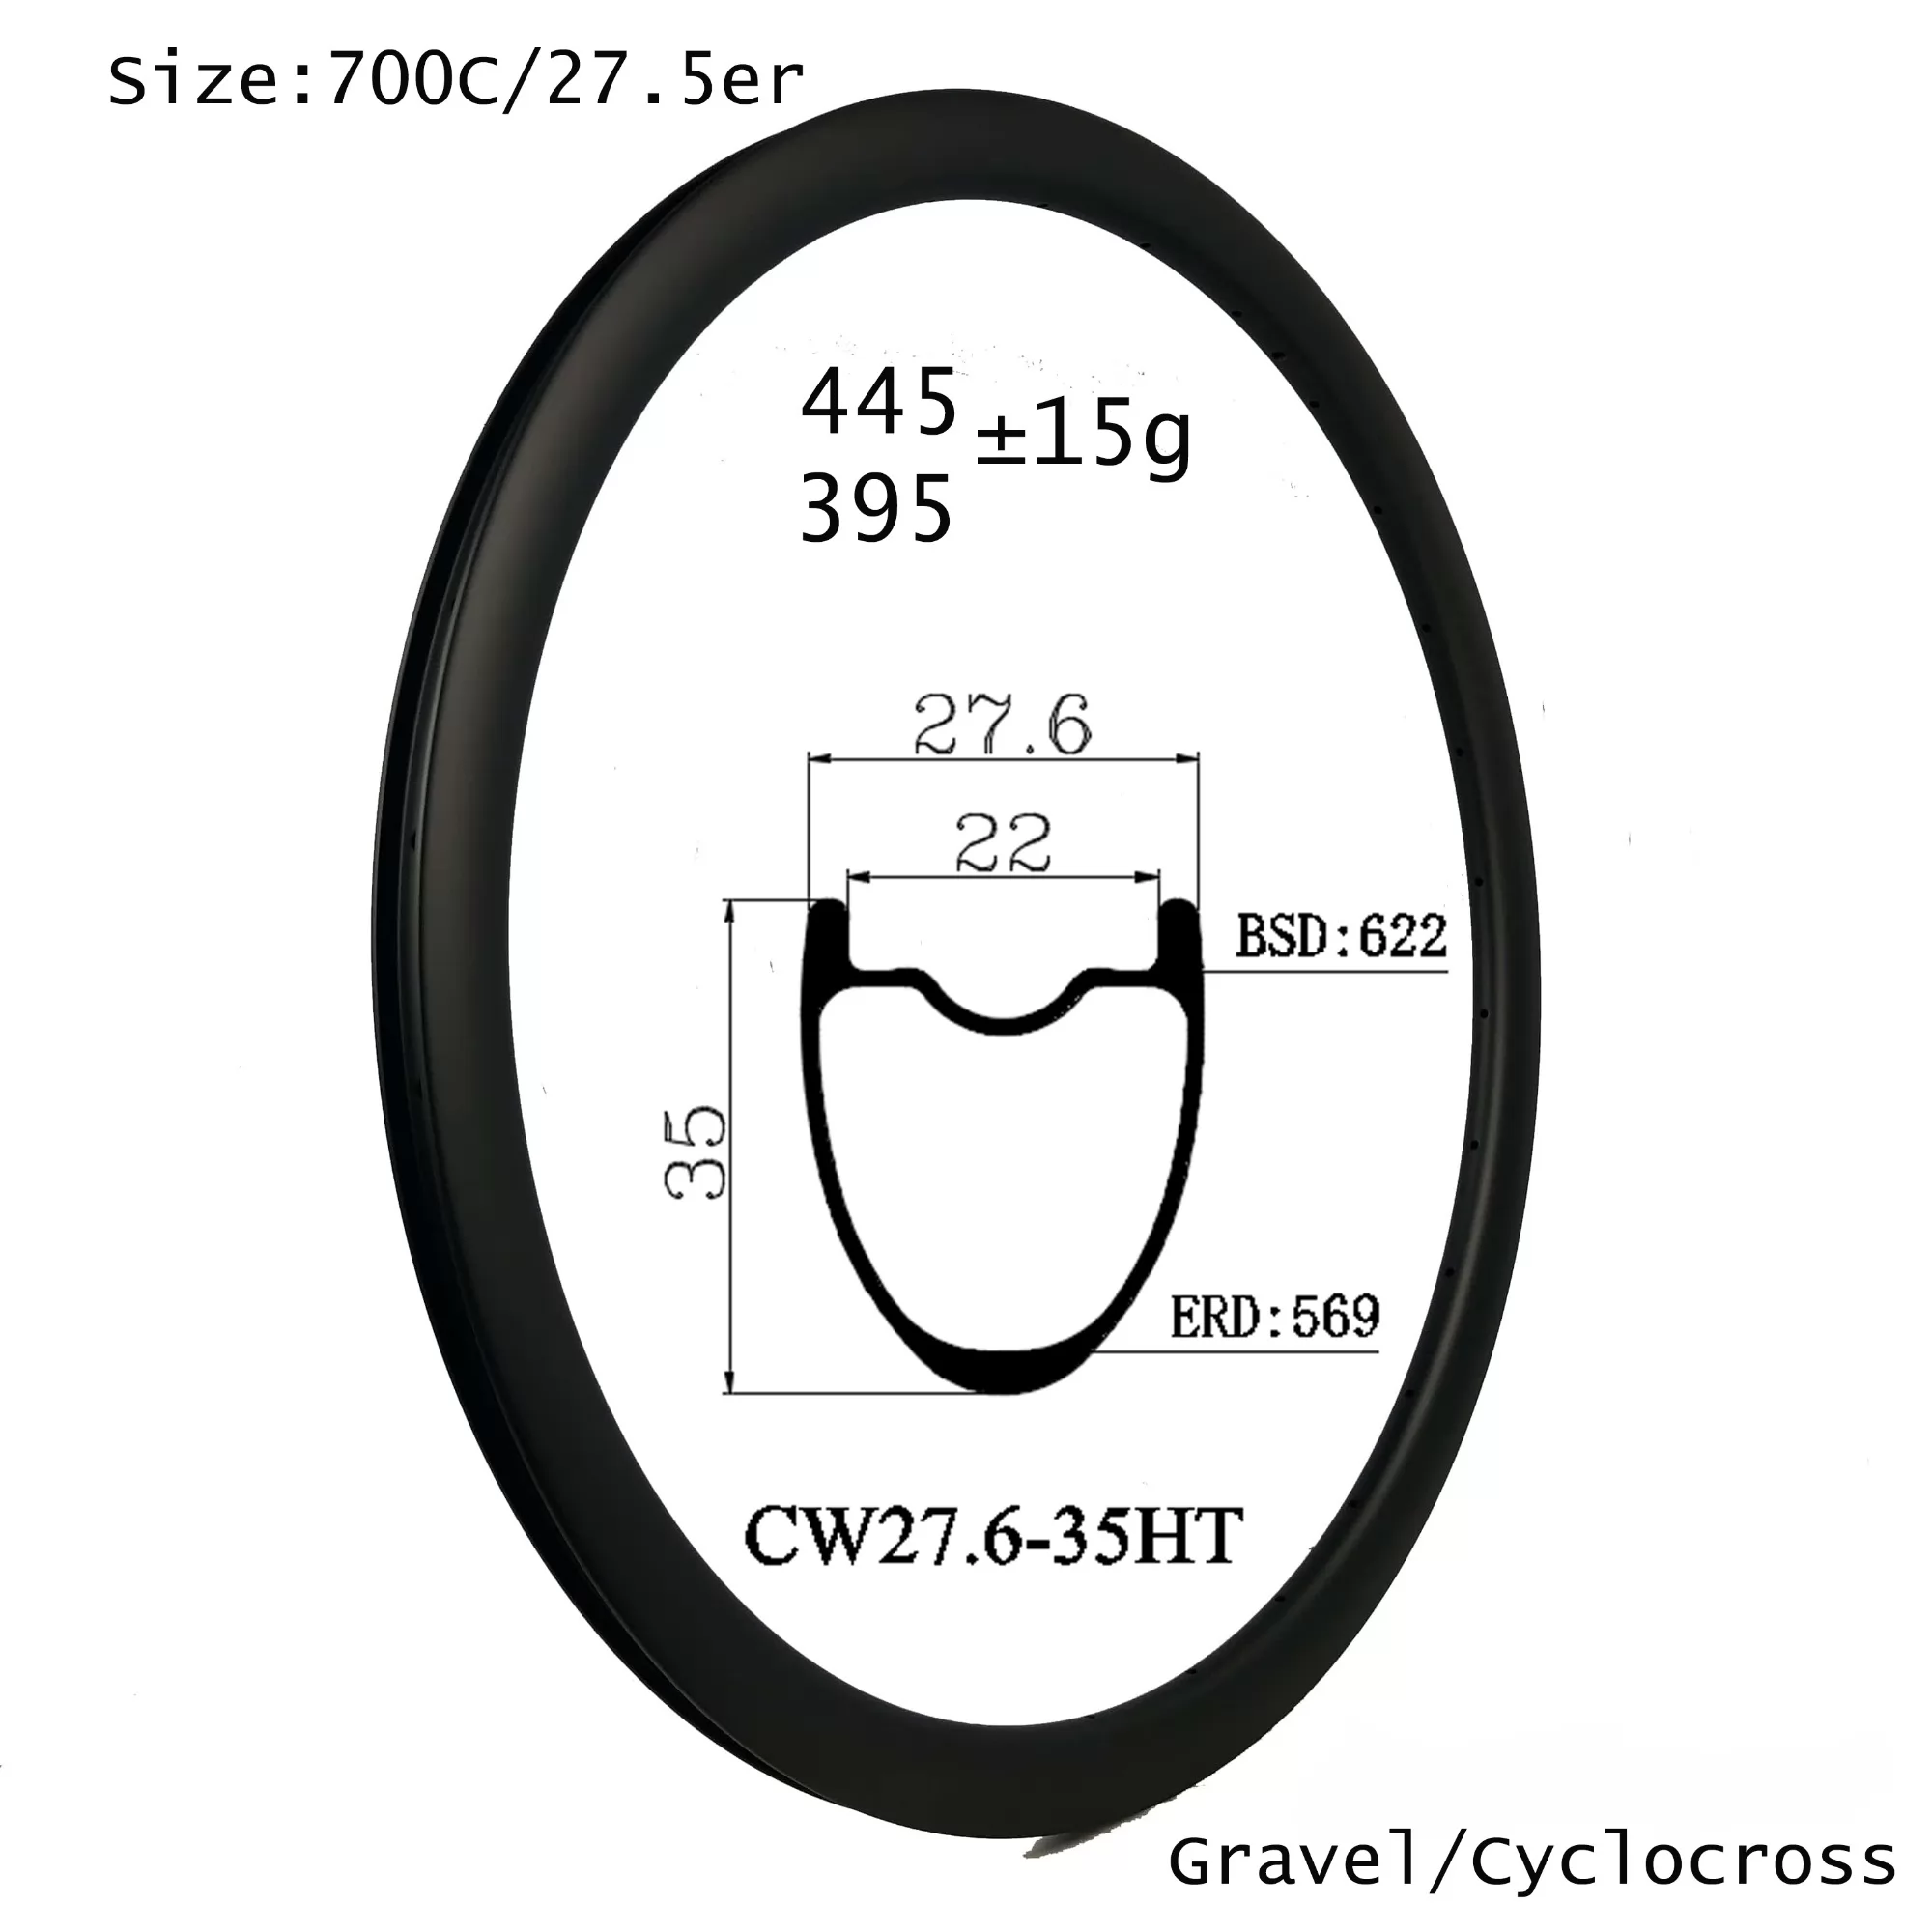 |CW27.6-35HT| 29er 35mm depth 27.6mm width hookless clincher tubeless carbon rims Gravel bike cyclocross disc brake rides light weights wheel